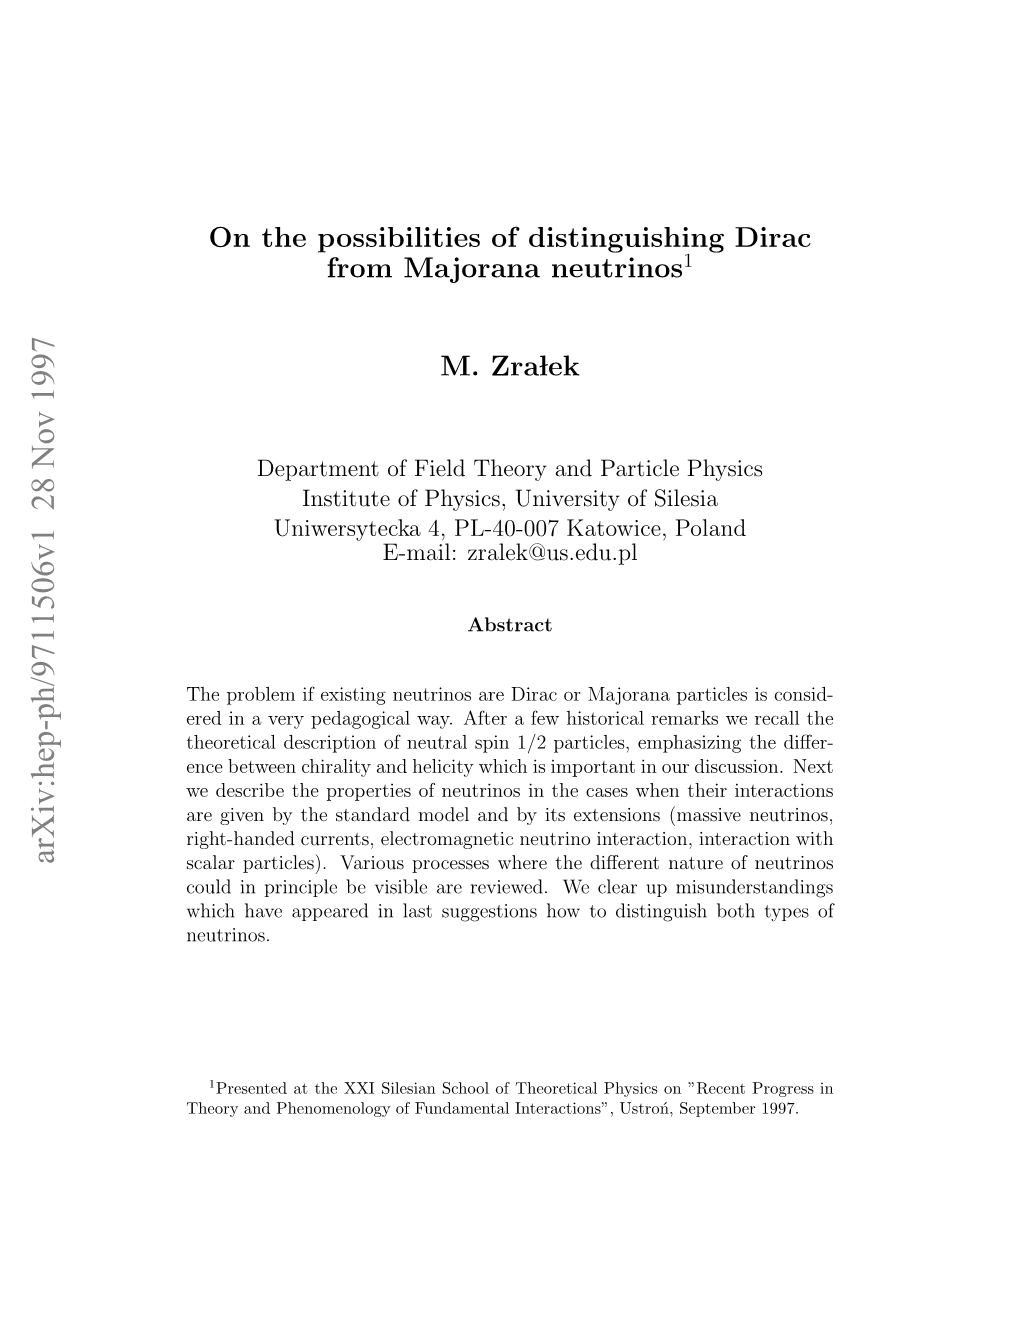 On the Possibilities of Distinguishing Dirac from Majorana Neutrinos